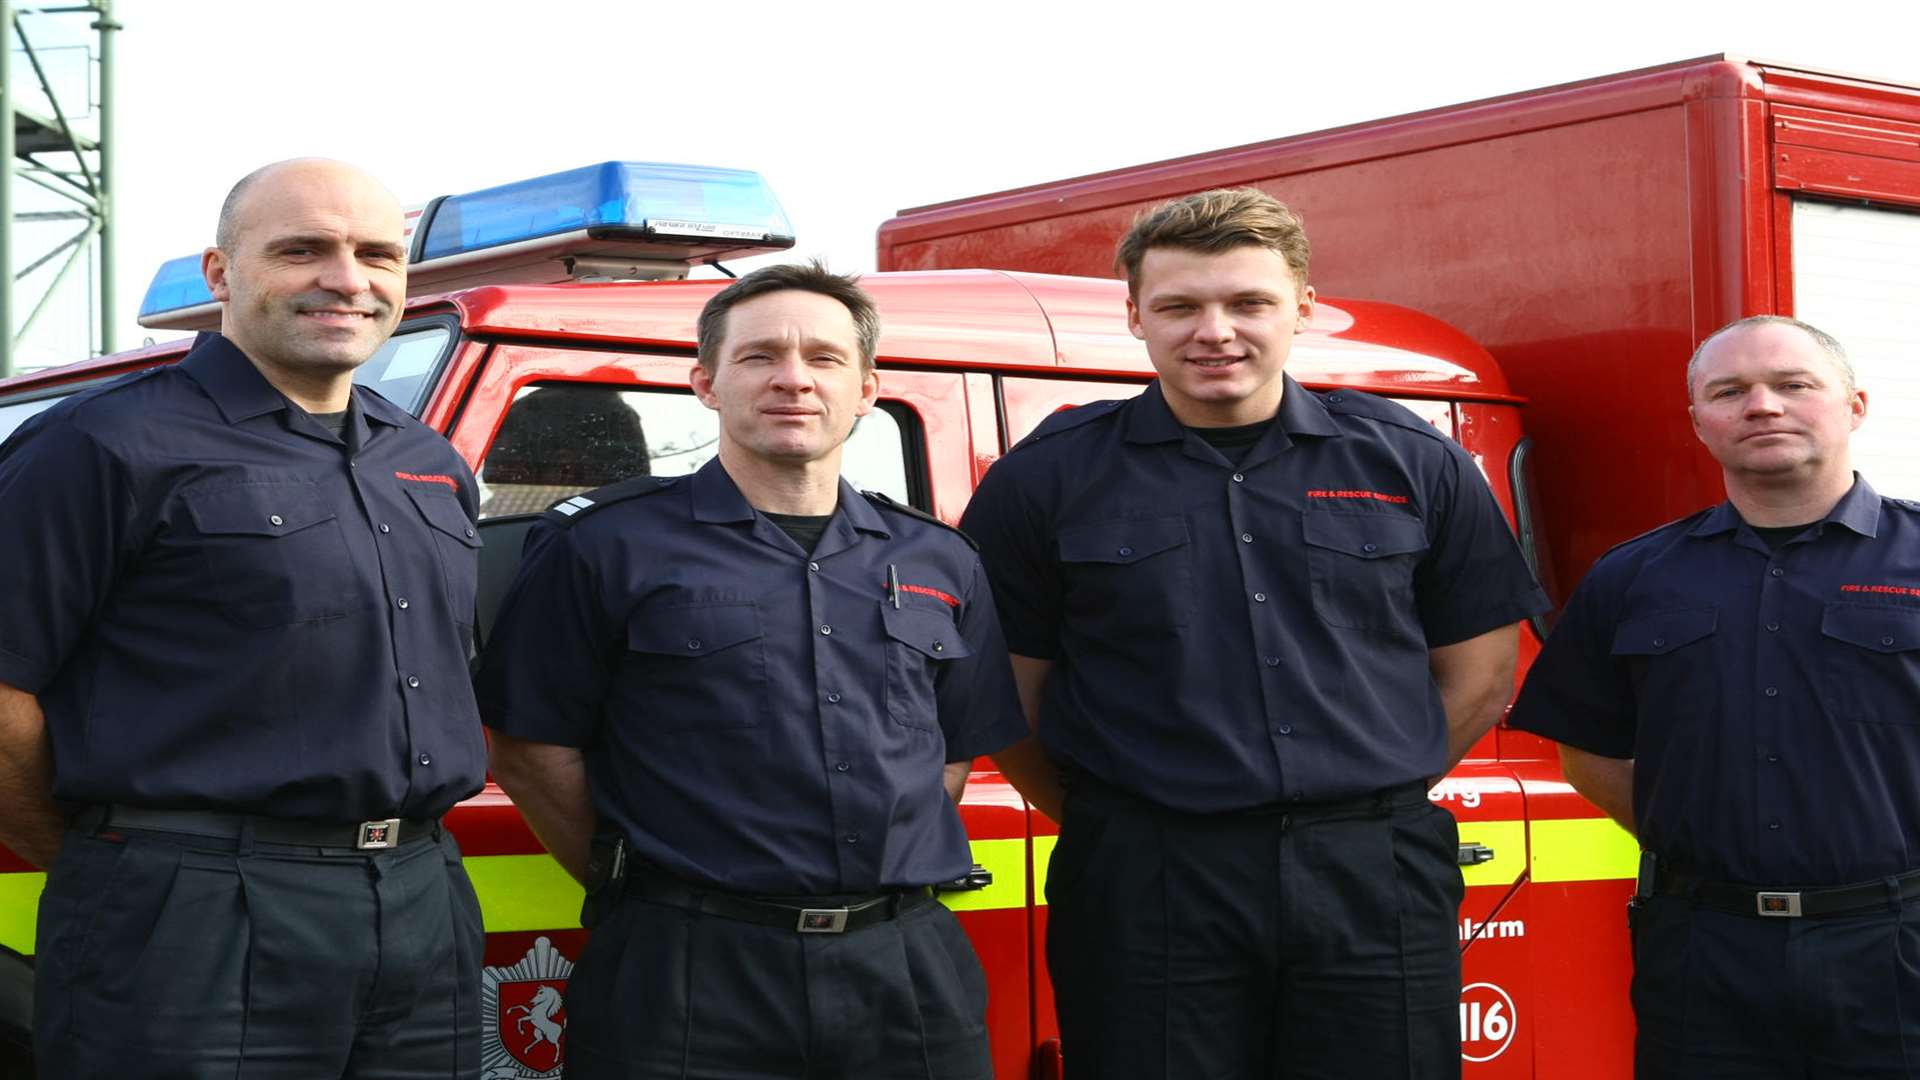 Firefighters Jamie Dodd, Paul Evans, Oliver Flood, Brad Rebbeck